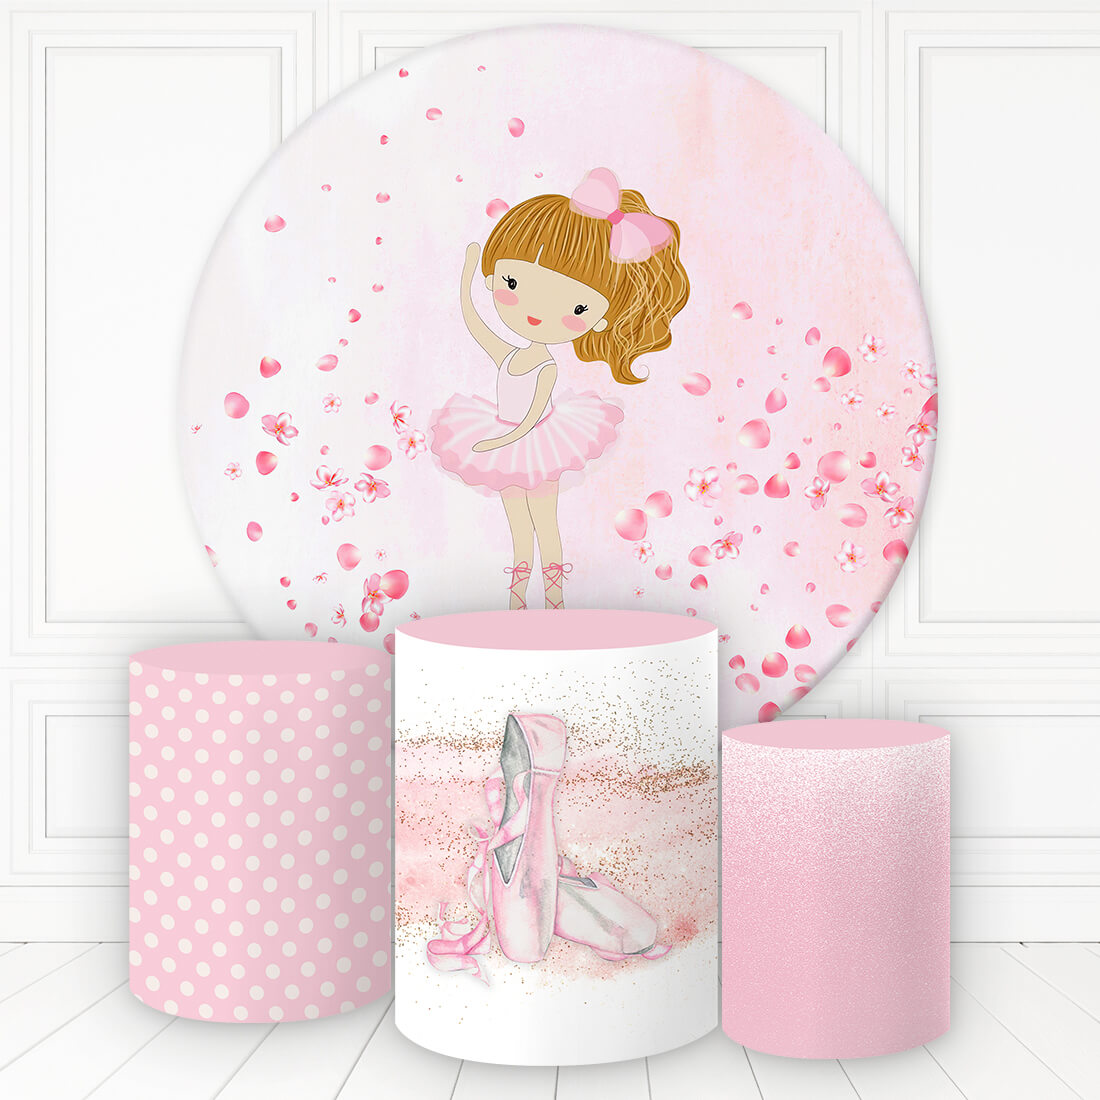 Lofaris Ponytail Girl Dance In Pink Petals Round Birthday Backdrop Kit